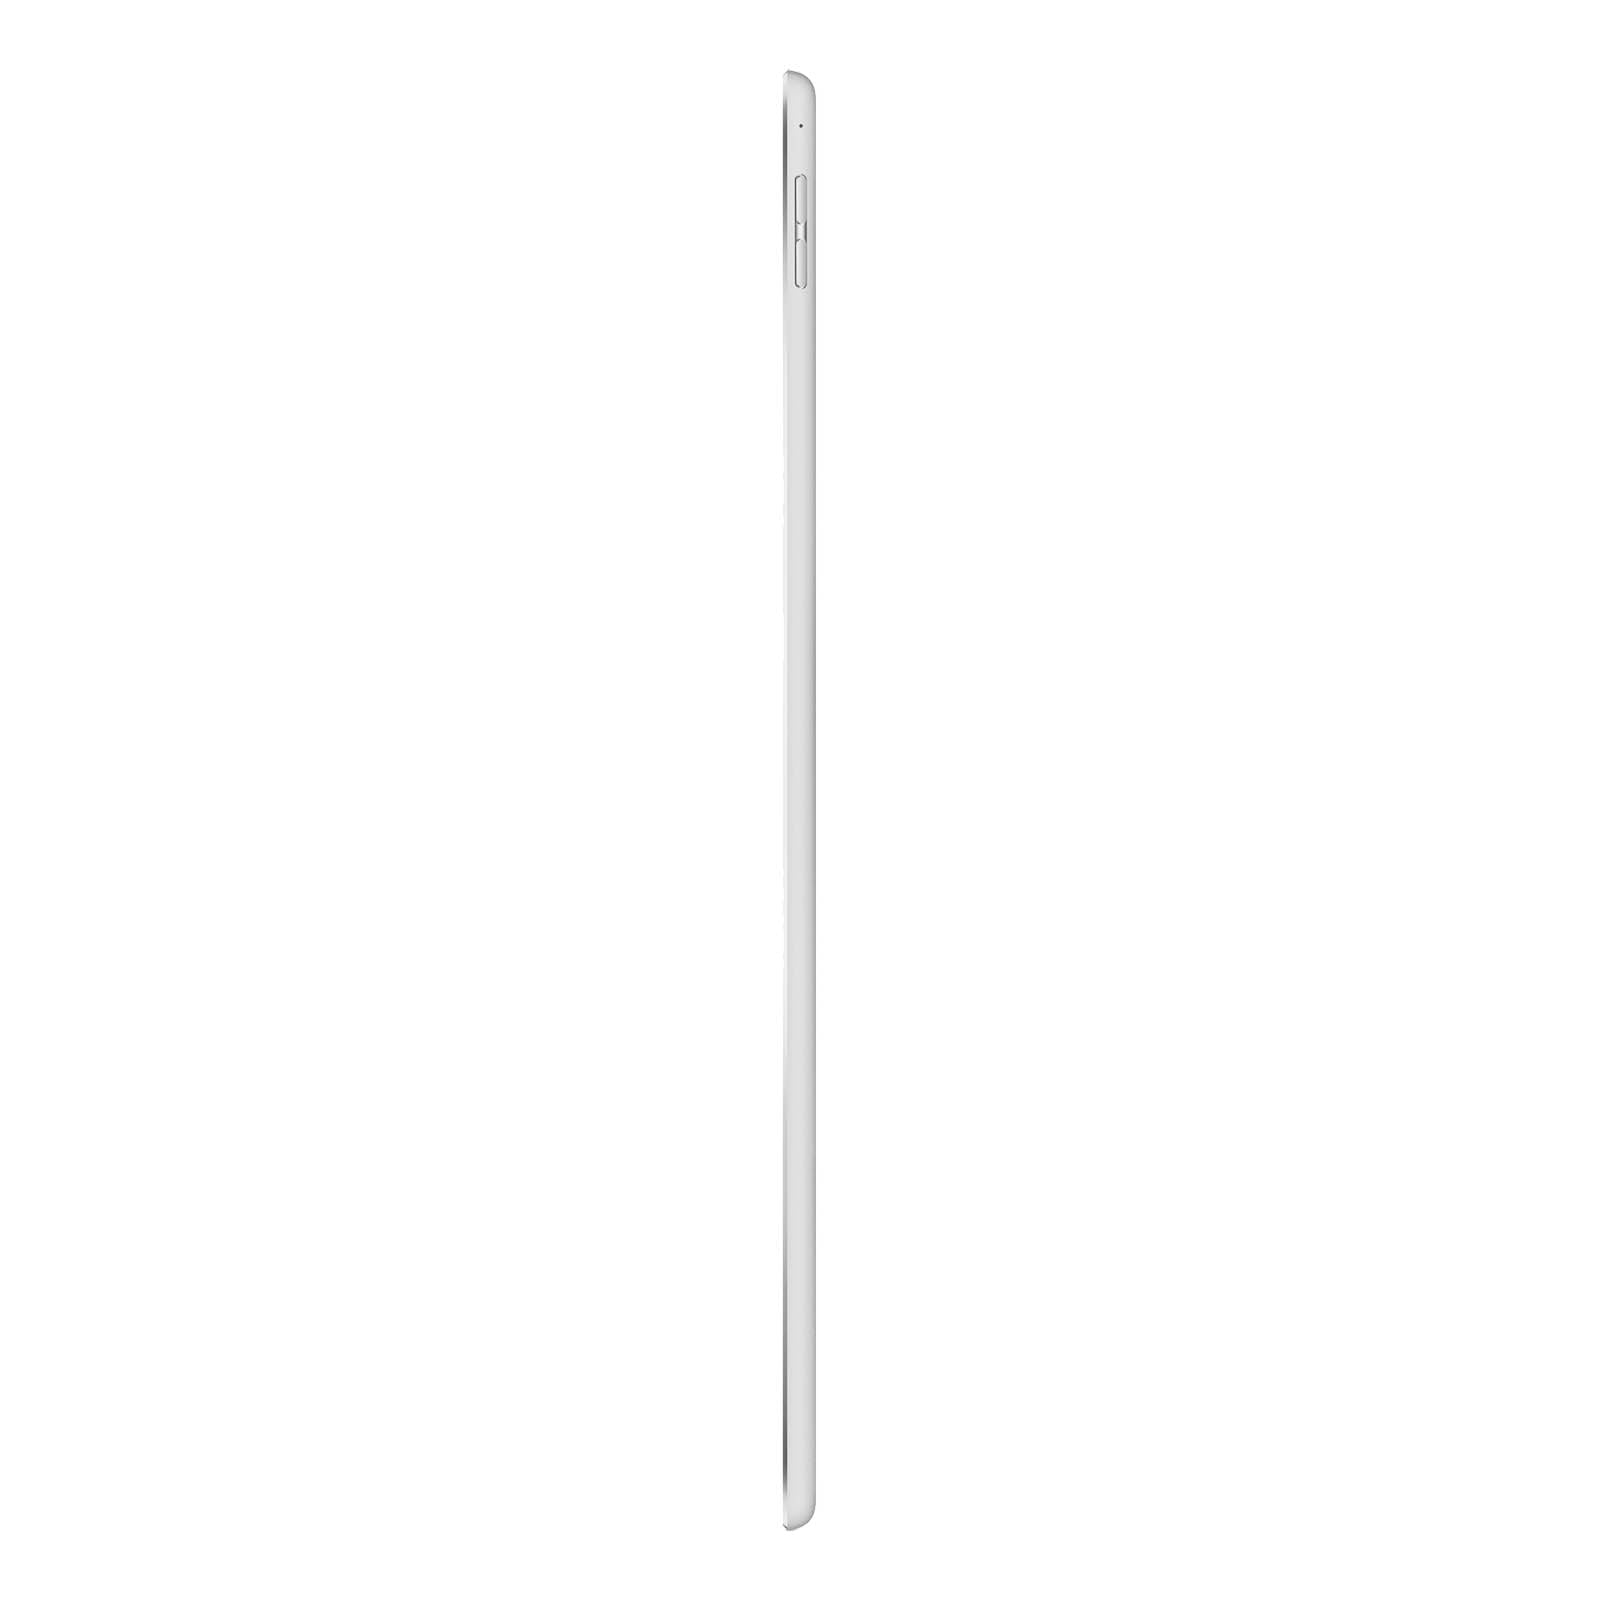 iPad Pro 12.9 Inch 1st Gen 32GB Silver Good - WiFi